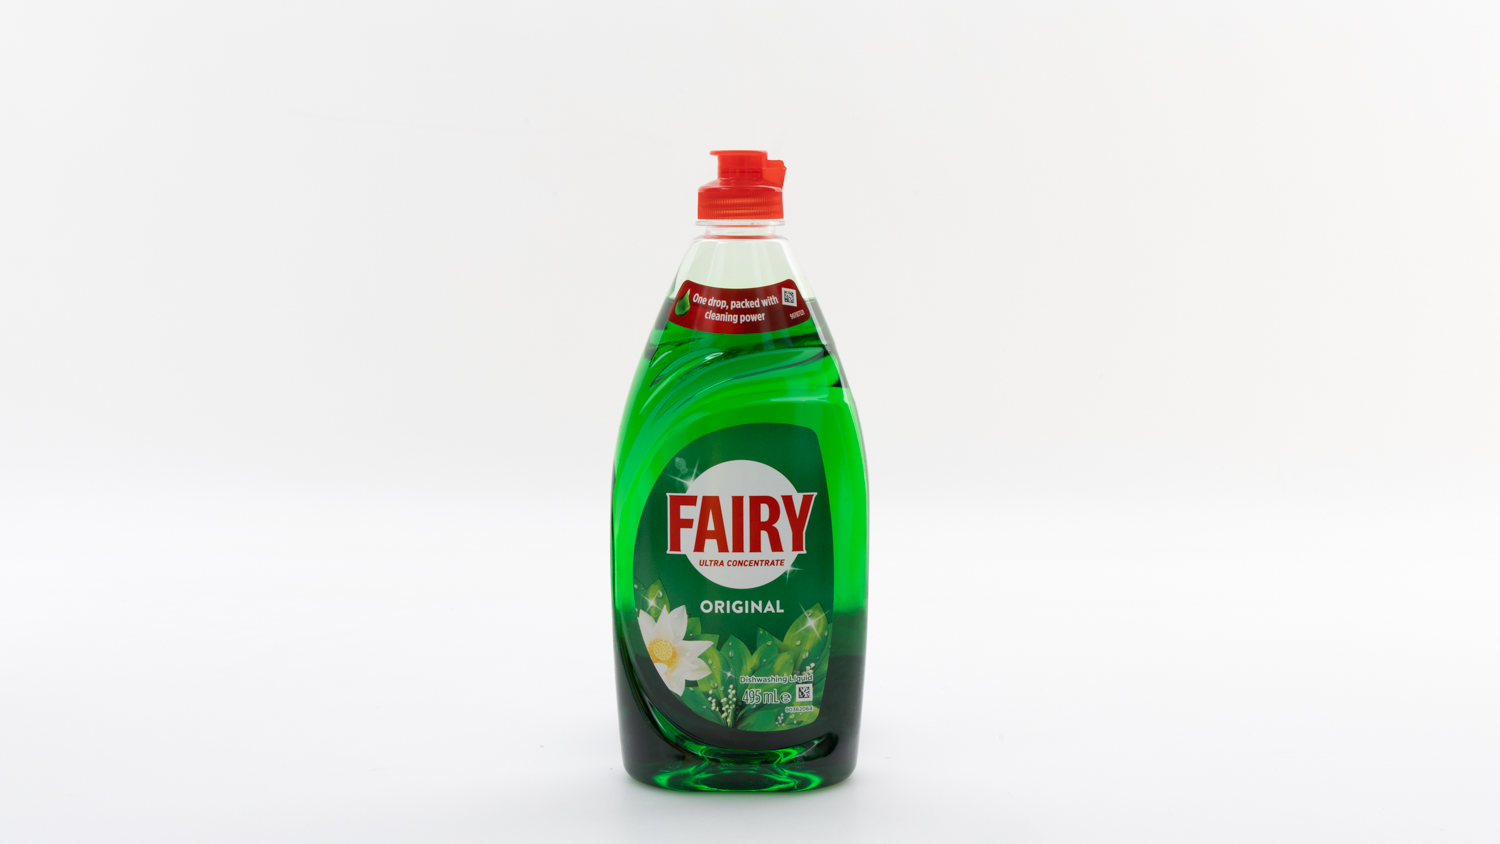 Fairy Ultra Concentrate Original Dishwashing Liquid carousel image